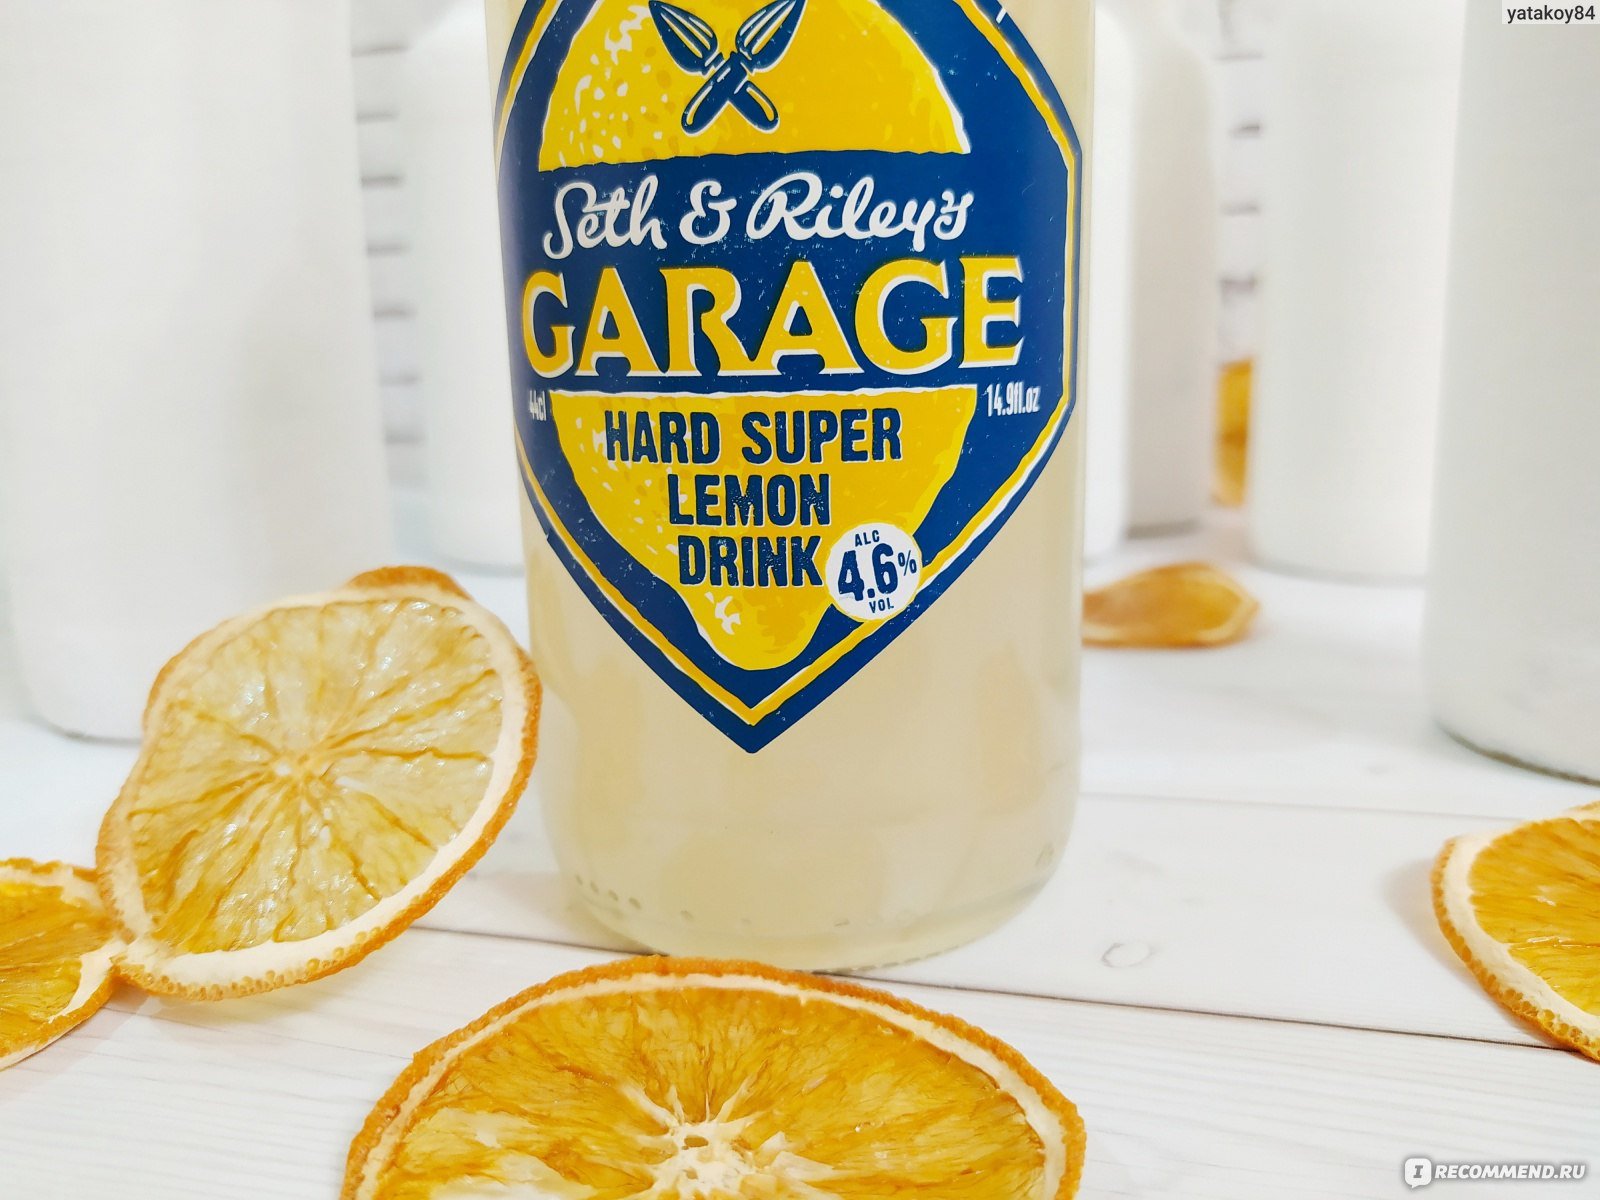 Seth riley garage. Пиво гараж лимон. Пивной напиток гараж. Гараж лимонный. Пивной напиток с лимоном.